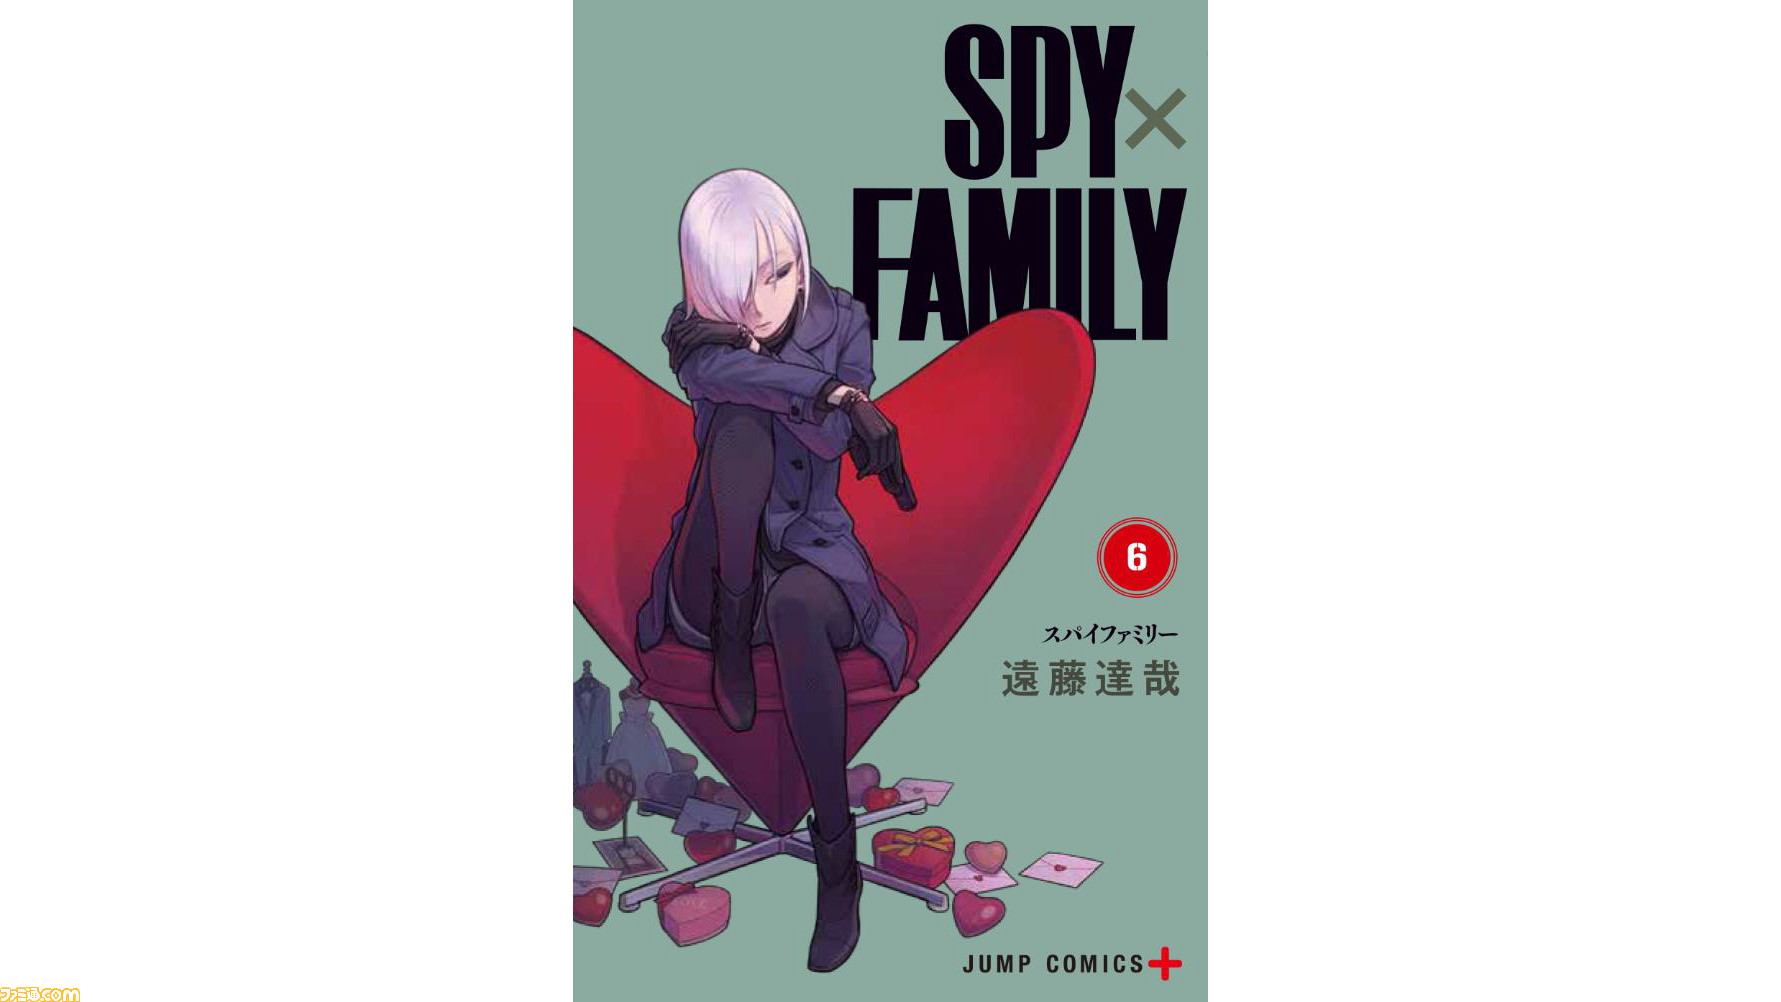 Spy Family 6巻の初版部数が100万部を突破 少年ジャンプ からは初の快挙 コミックス累計発行部数は800万部を突破 ファミ通 Com